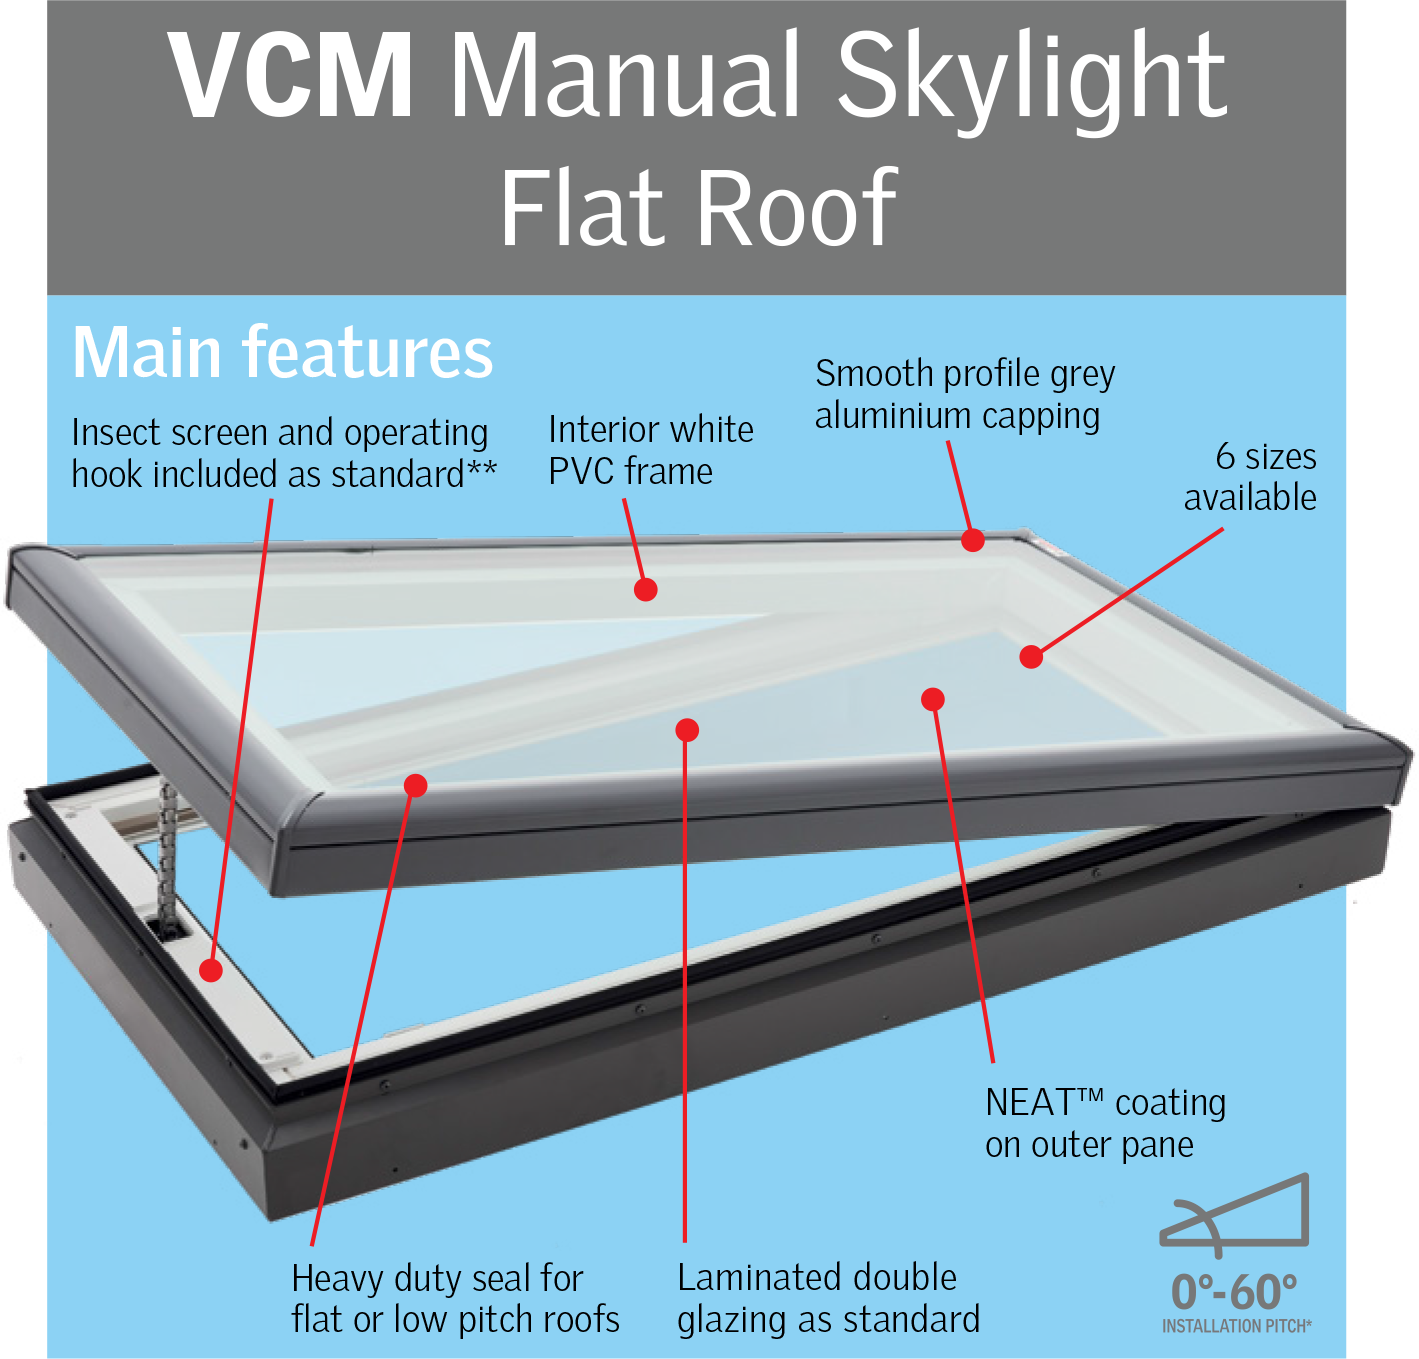 VCM-Manual-Skylight-Flat-Roof